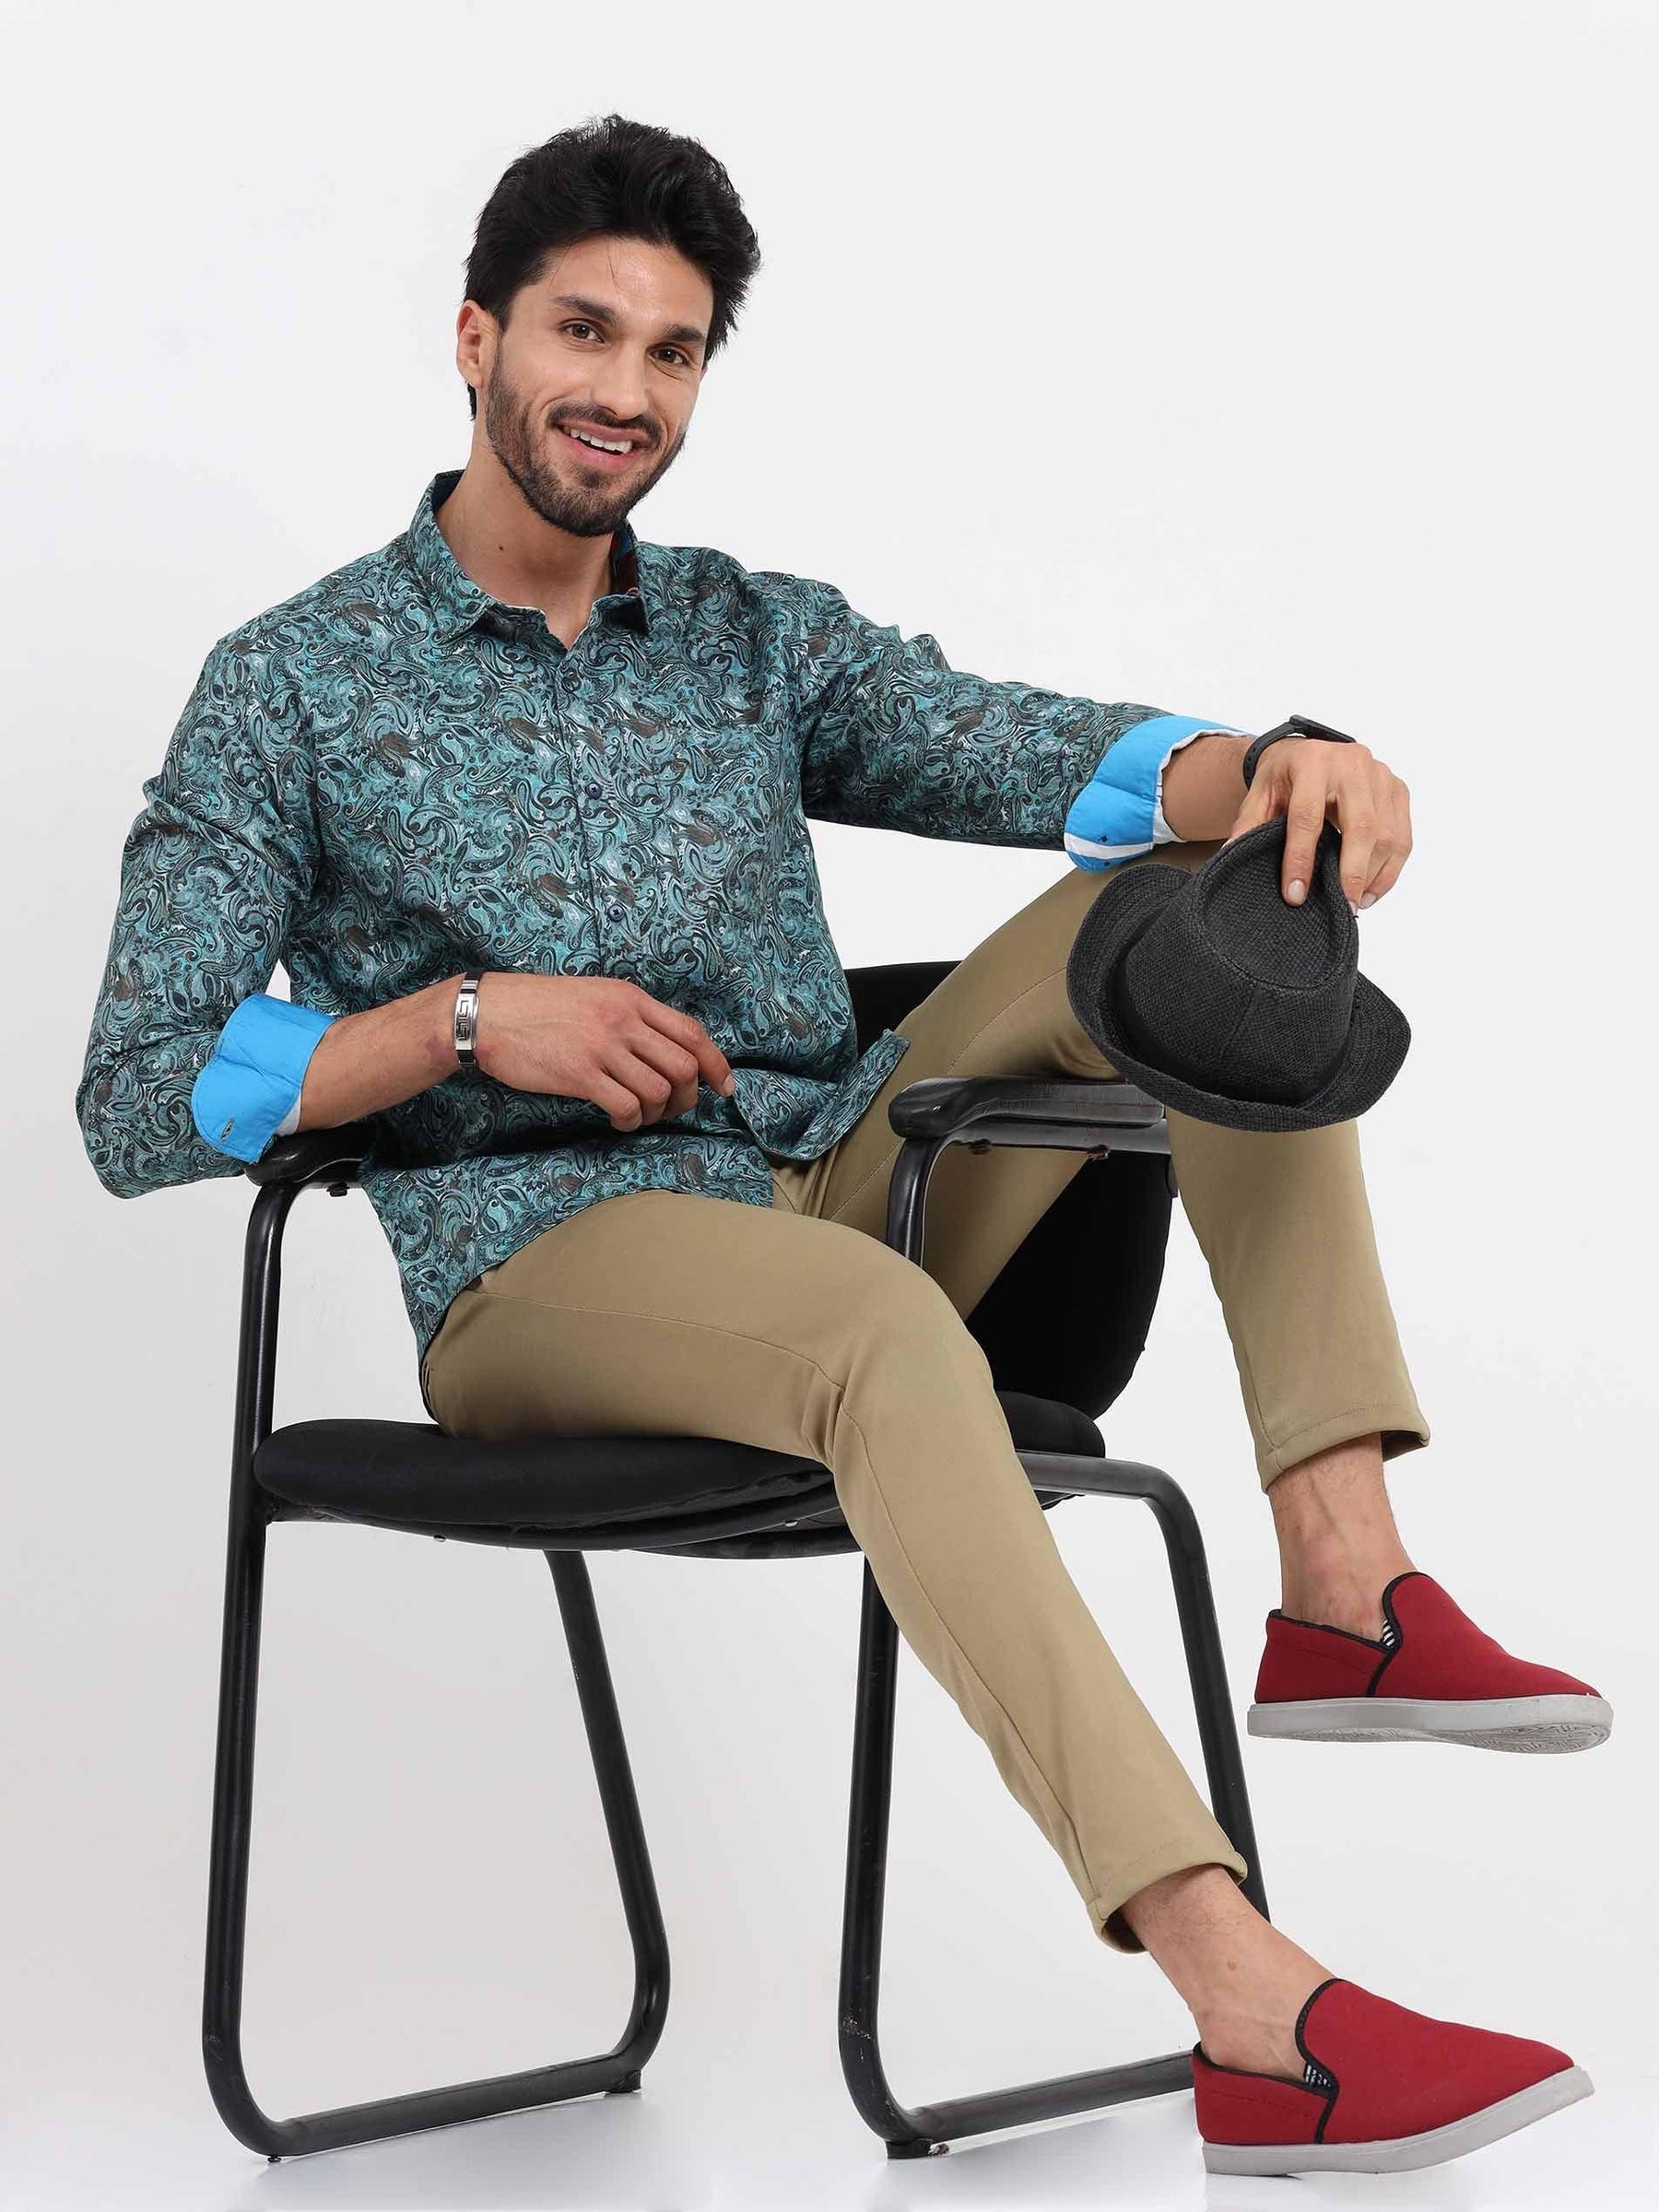 Azure Abstract Printed Full Sleeve Shirt - Guniaa Fashions